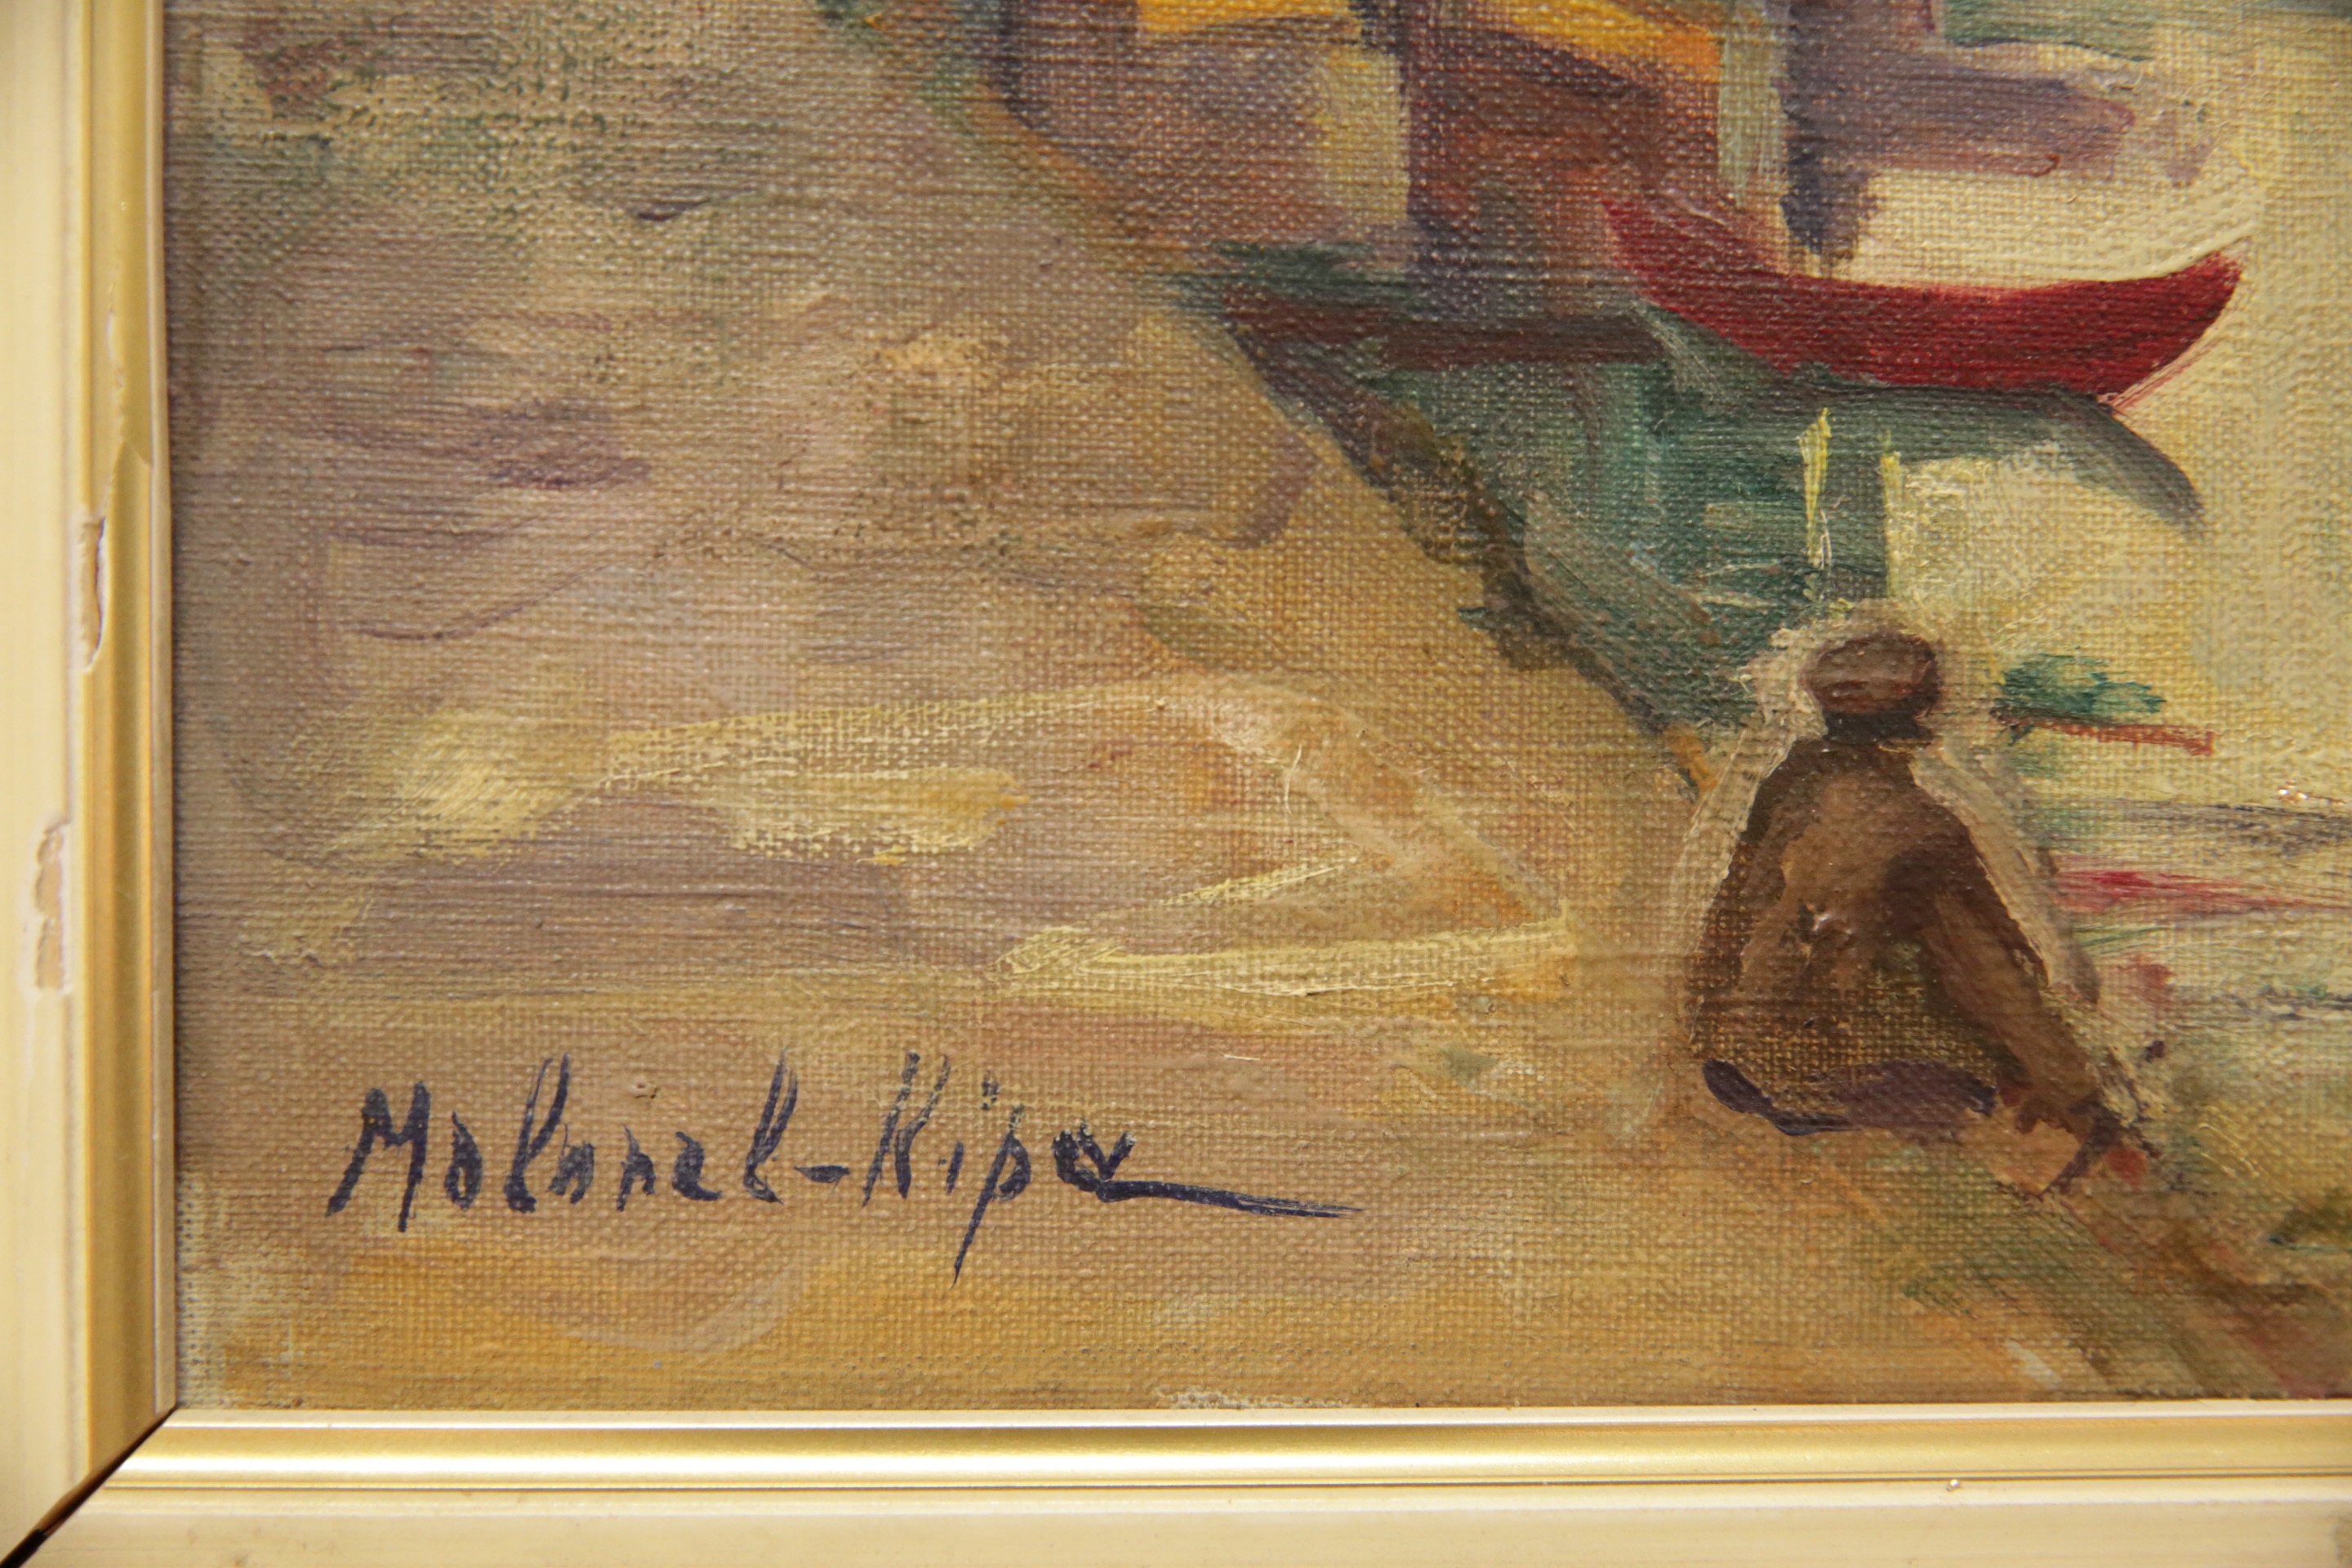 Molonel-Kipa (1906-1966) "Quai et barge", oil on canvas, Russia - France artist. - Image 4 of 4